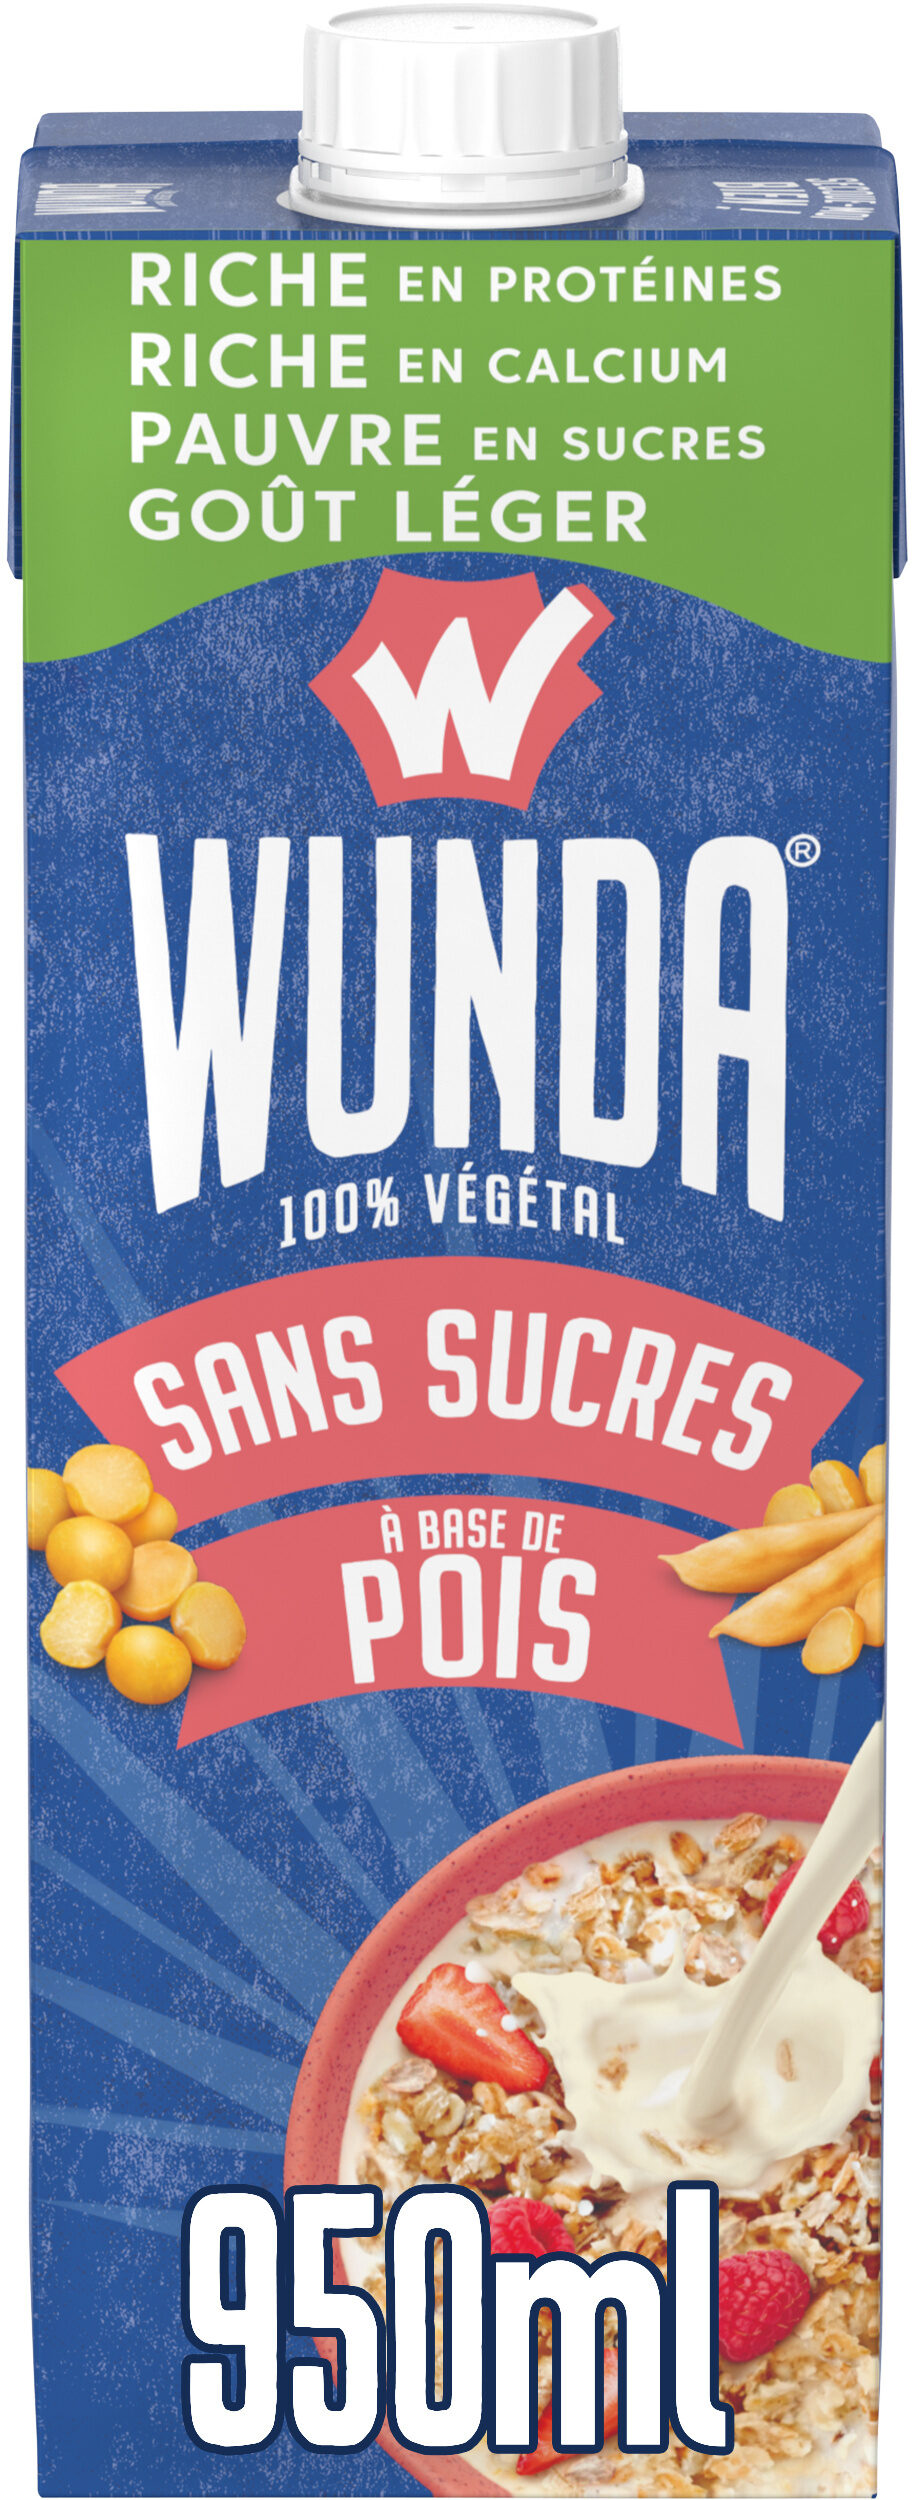 WUNDA Sans sucres 950ml - Product - fr